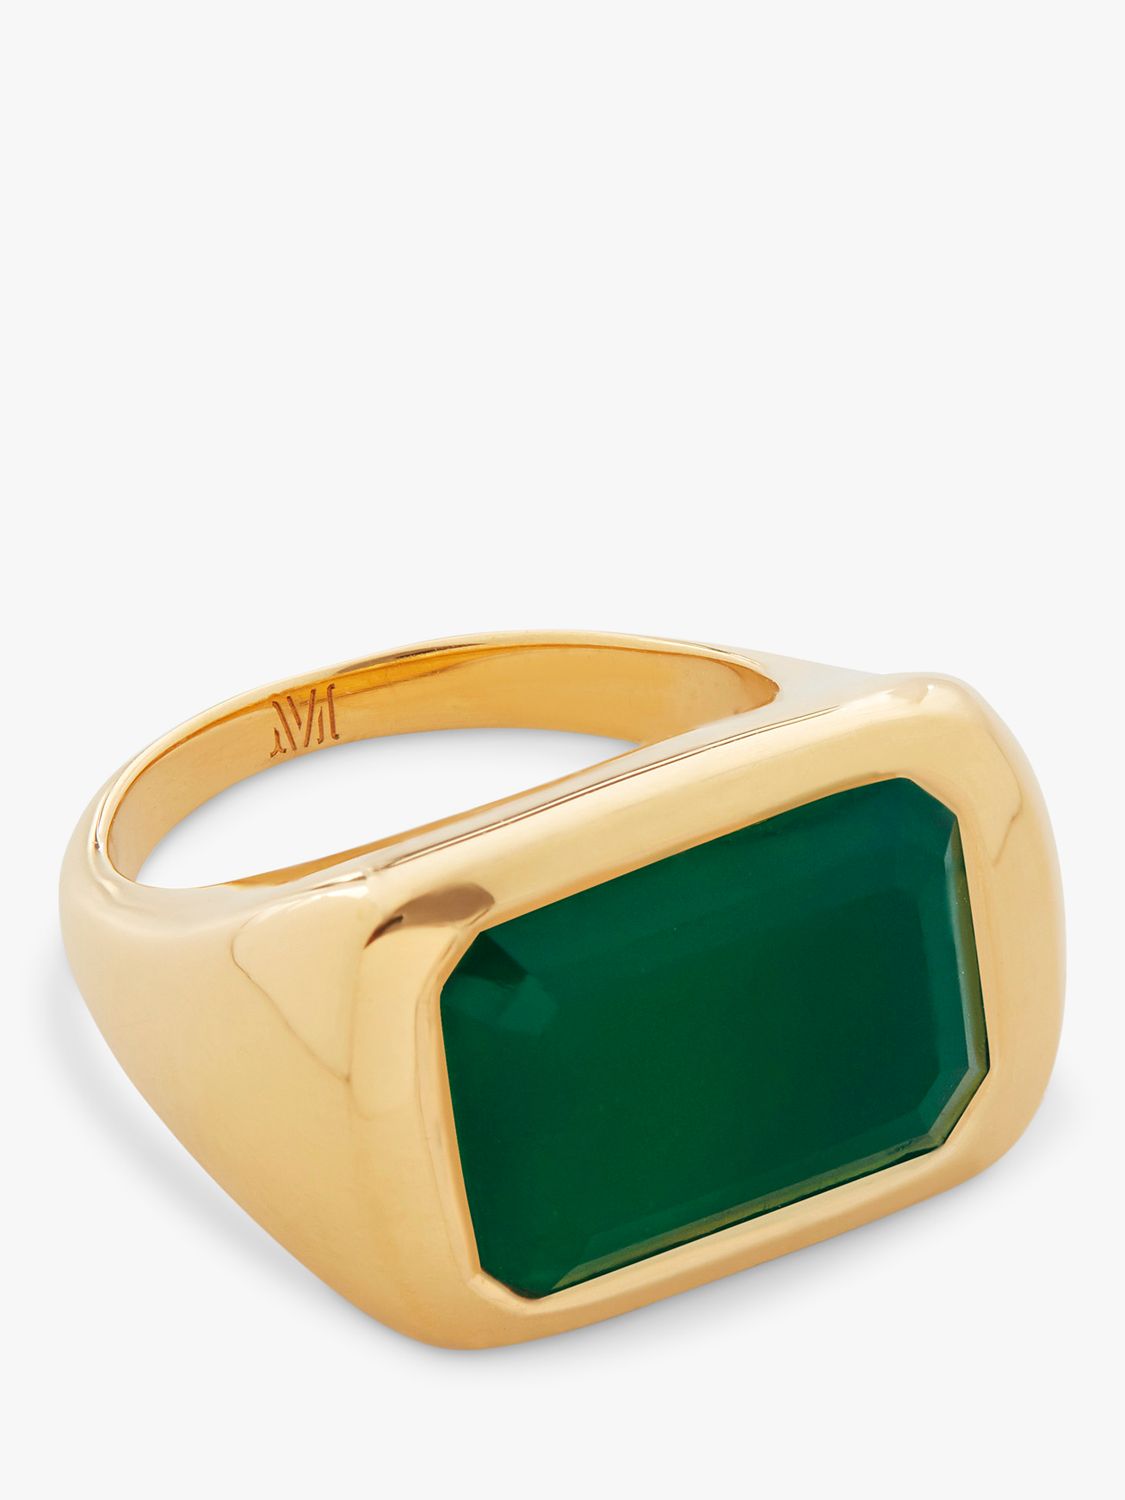 Monica Vinader Onyx Cocktail Ring, Gold/Green, I